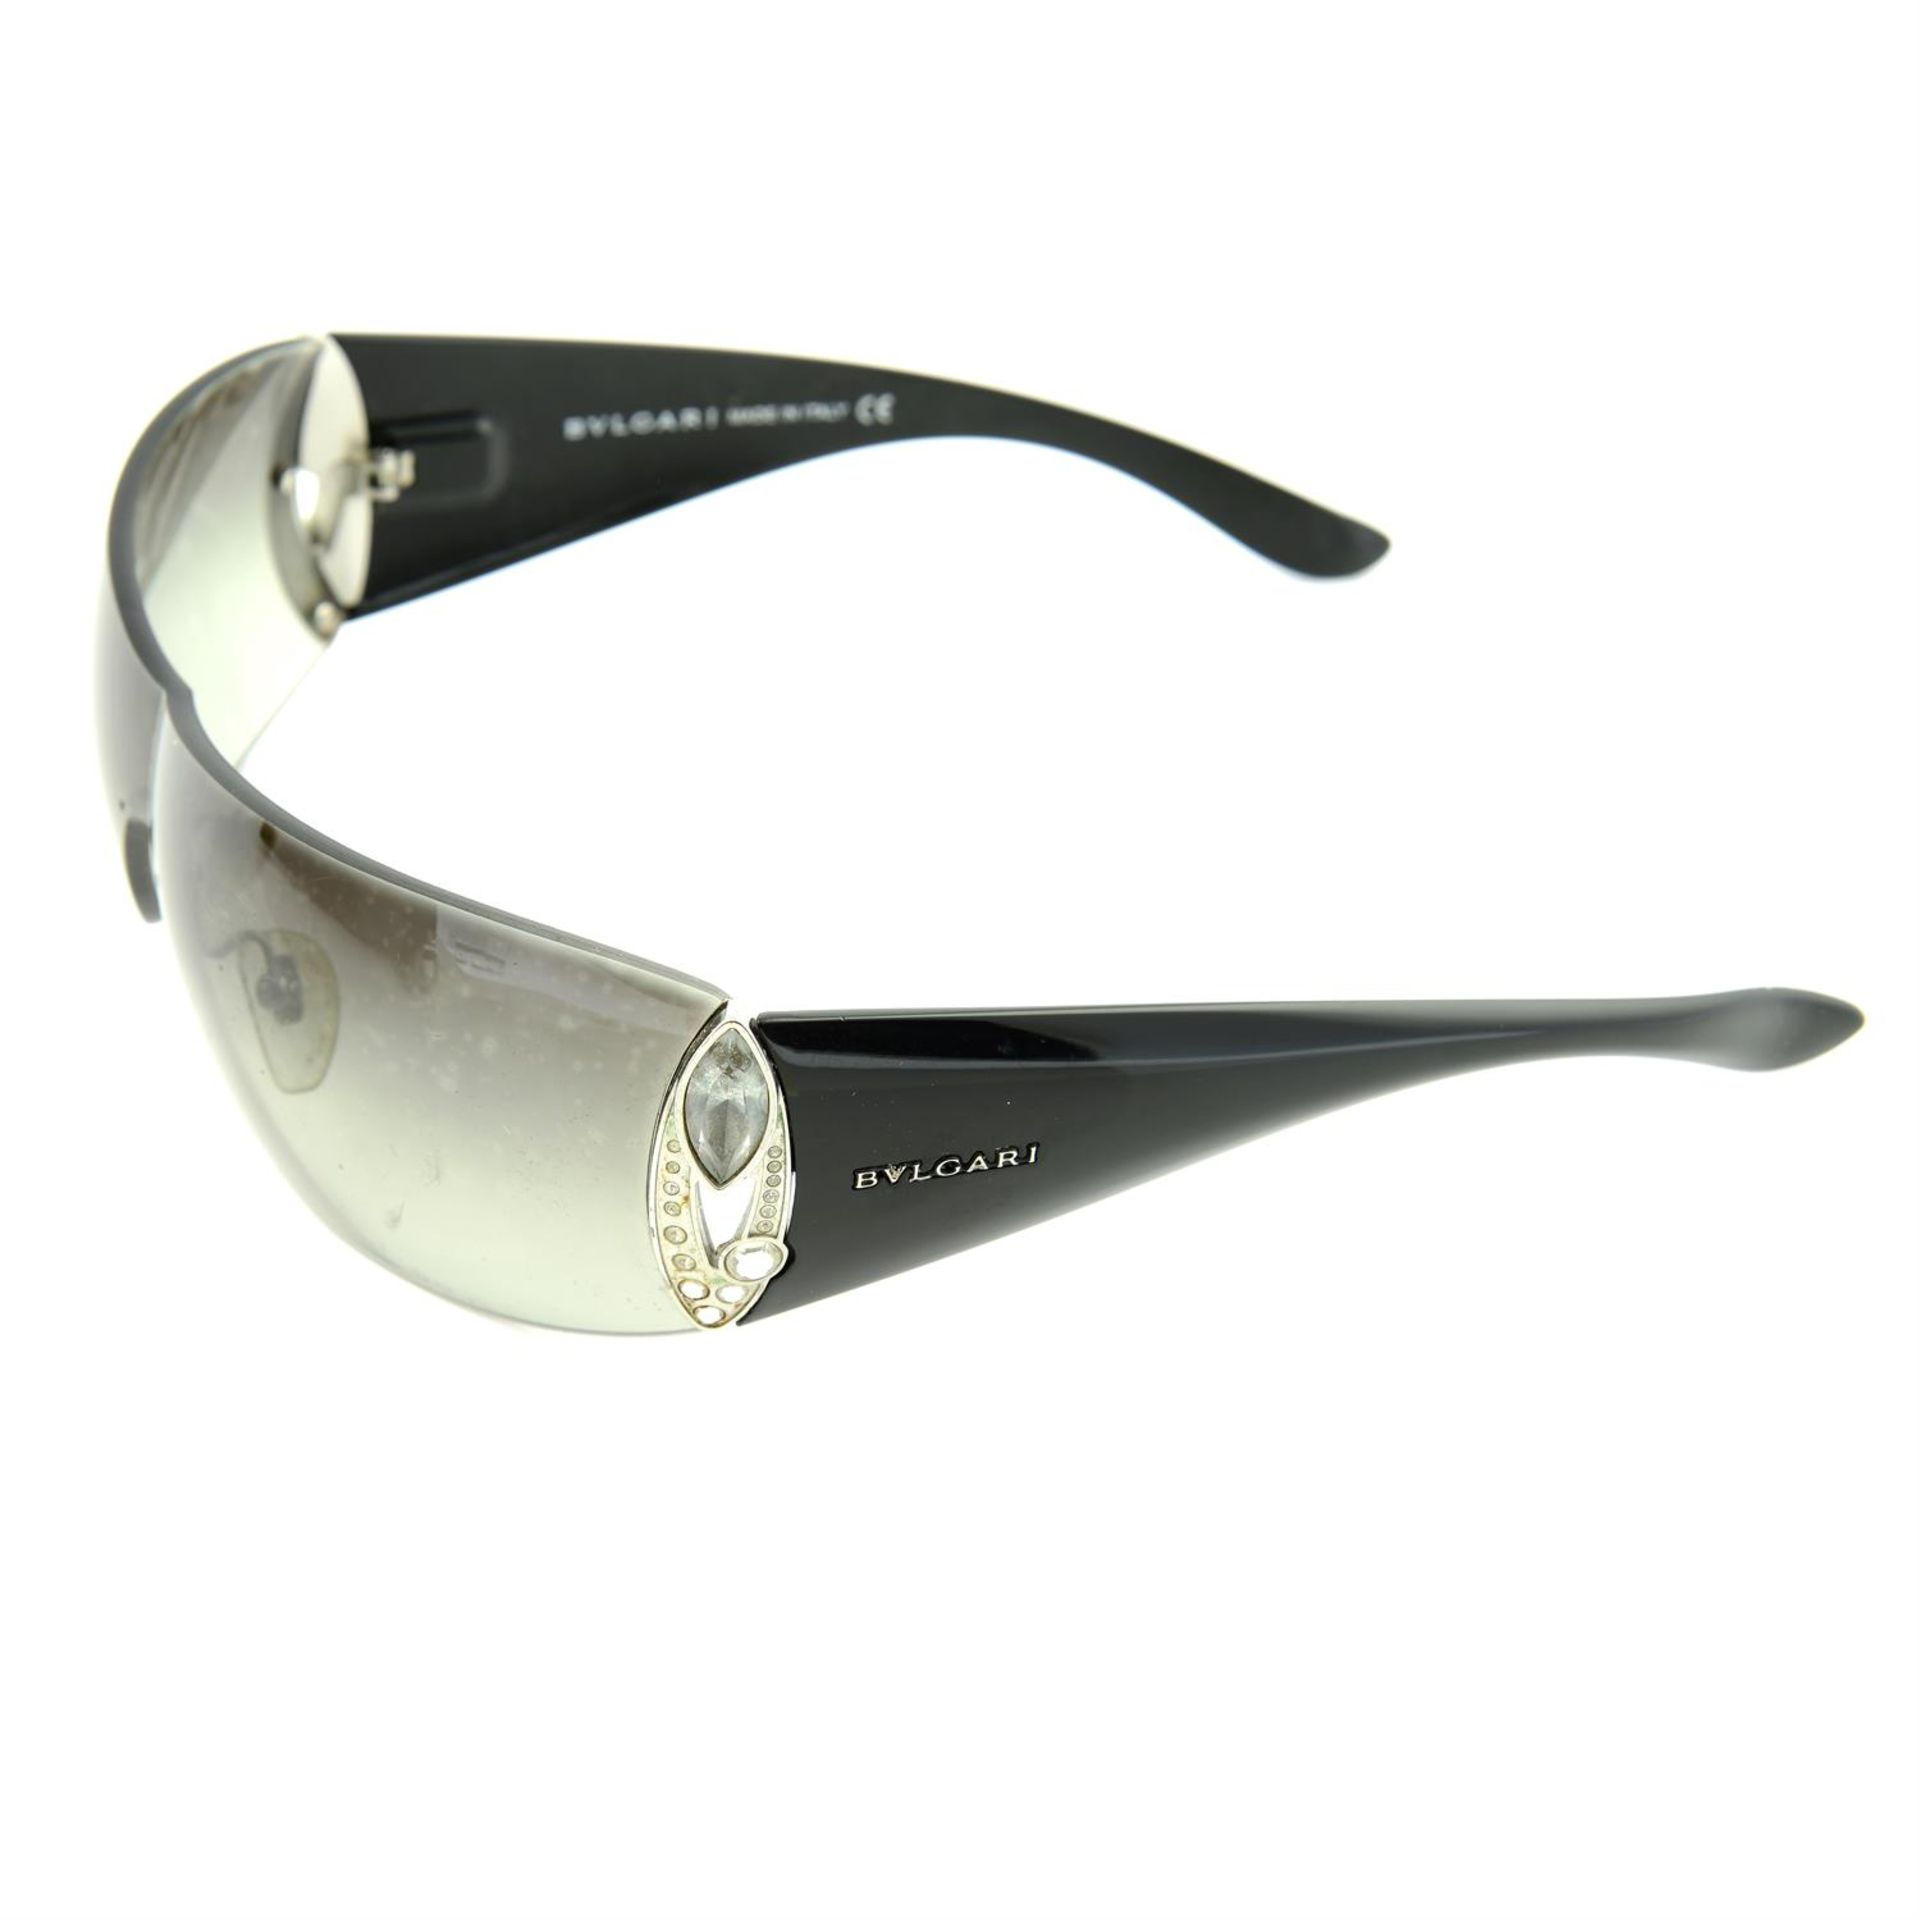 BULGARI - a pair of rimless sunglasses - Image 3 of 3